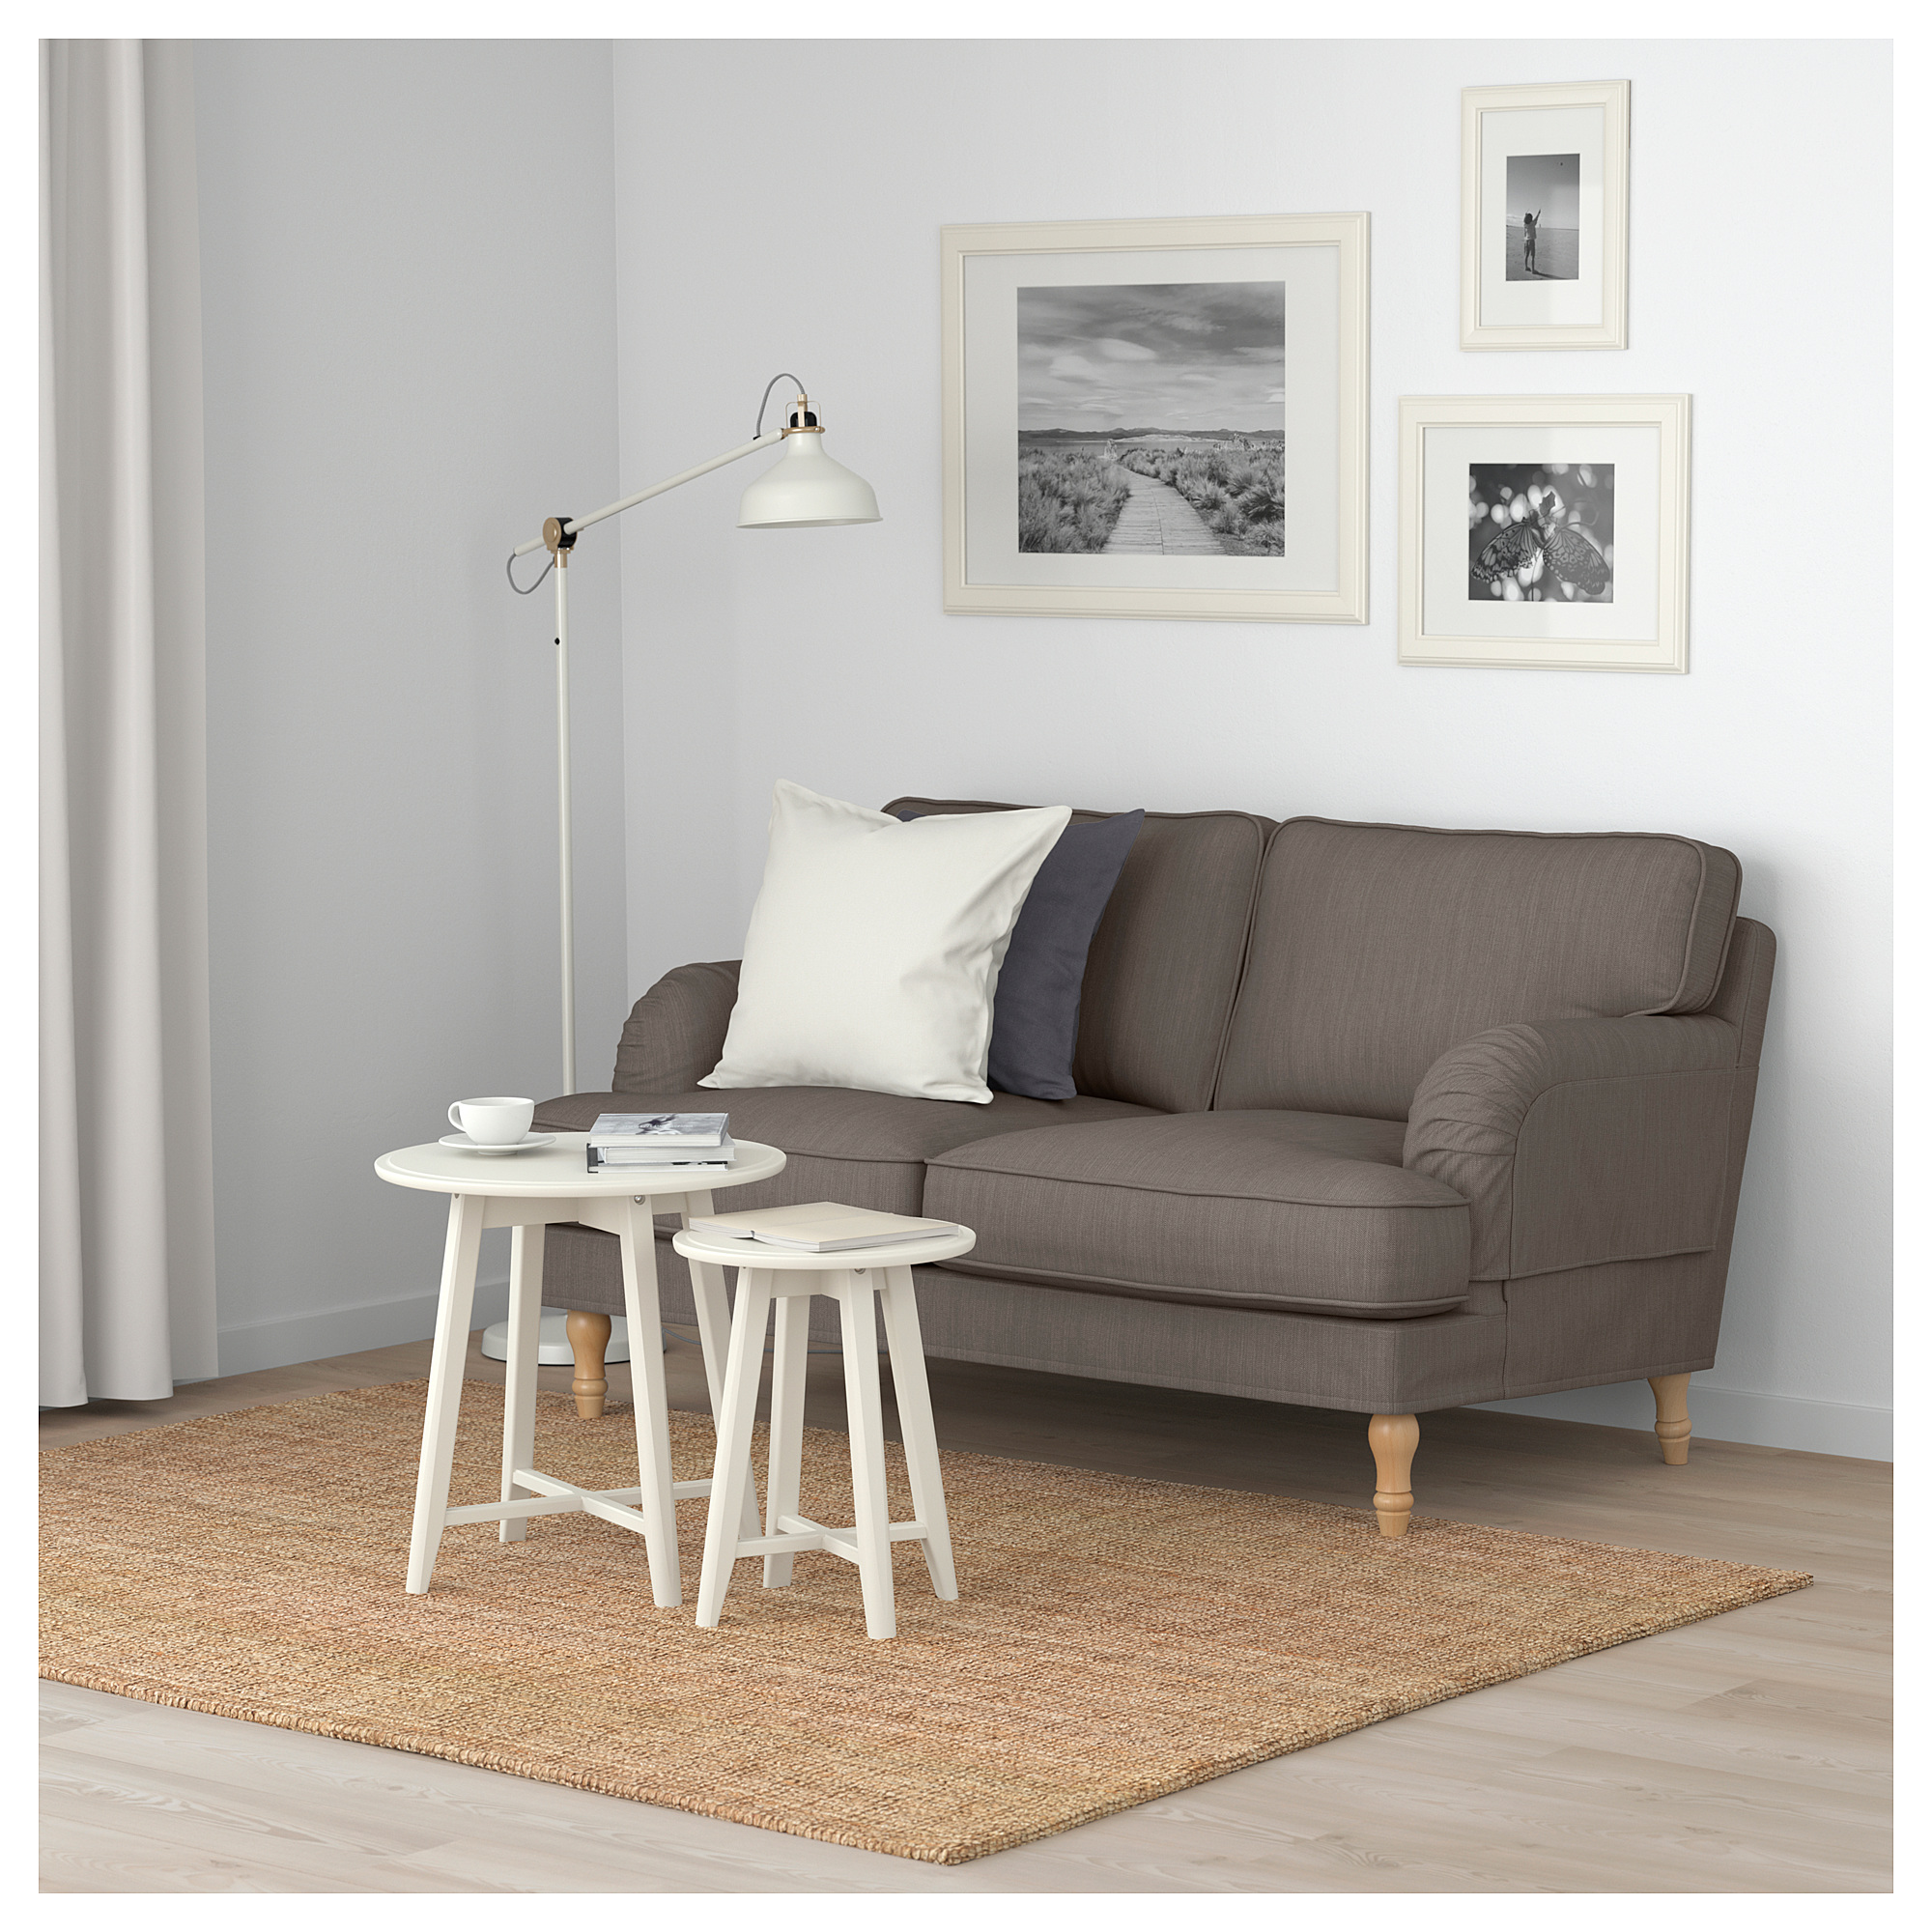 STOCKSUND - 2-seat sofa, Nolhaga grey-beige/light brown/wood | IKEA ...